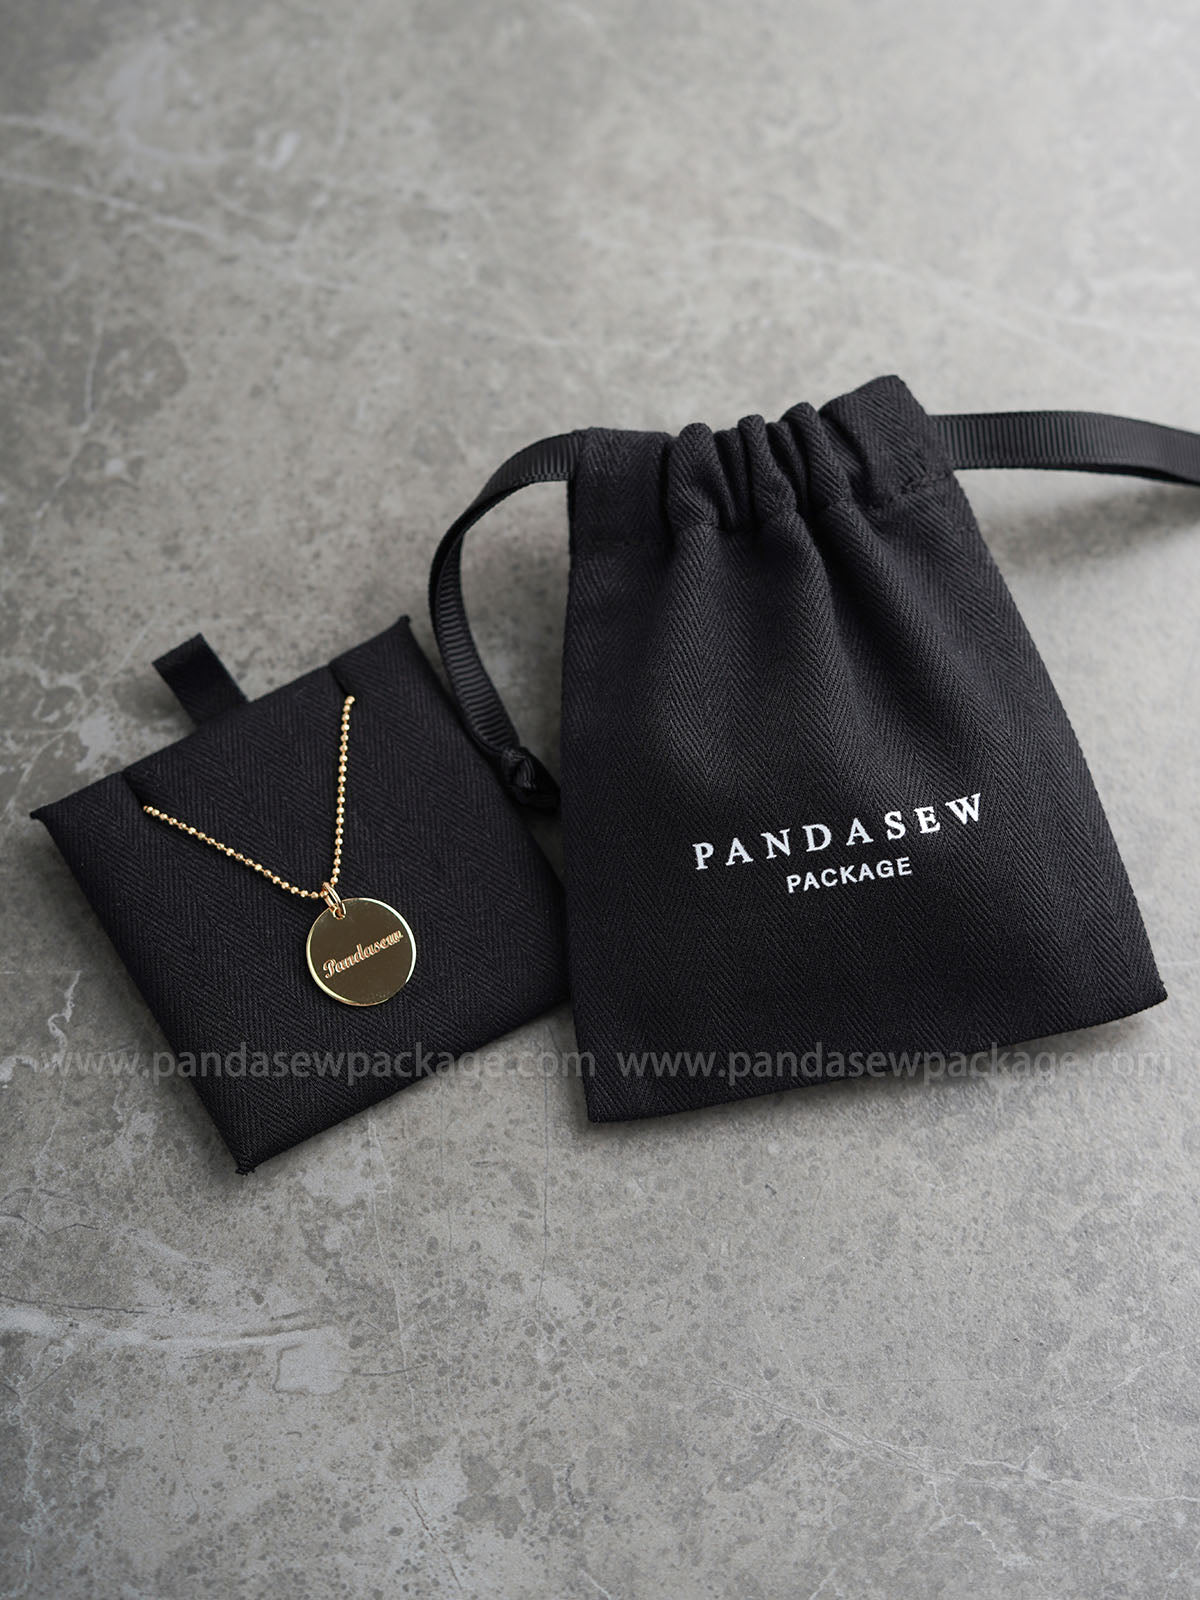 luxury jewelry packaging